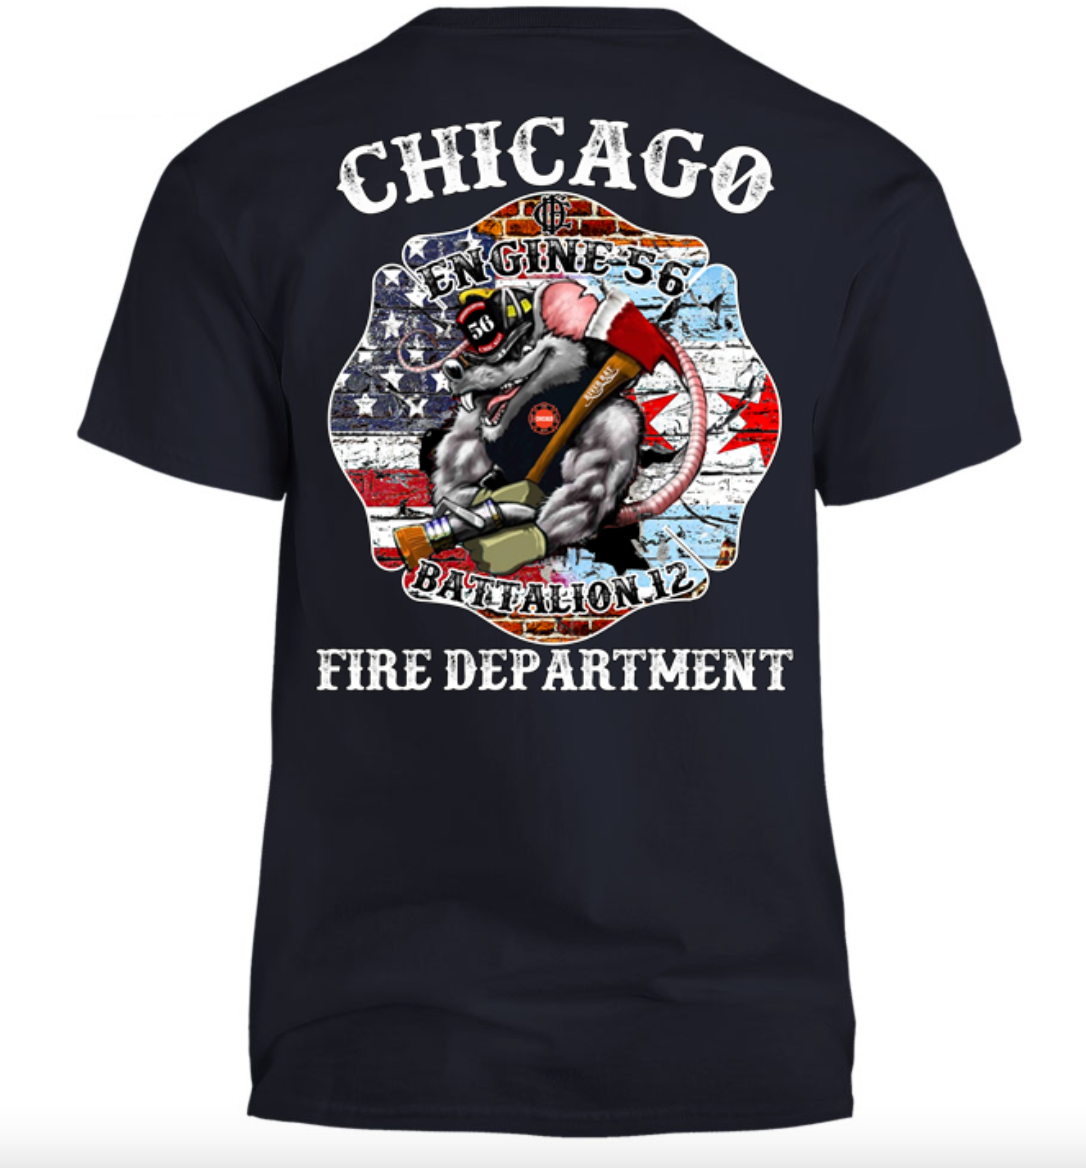 Chicago Engine 56 House Shirt